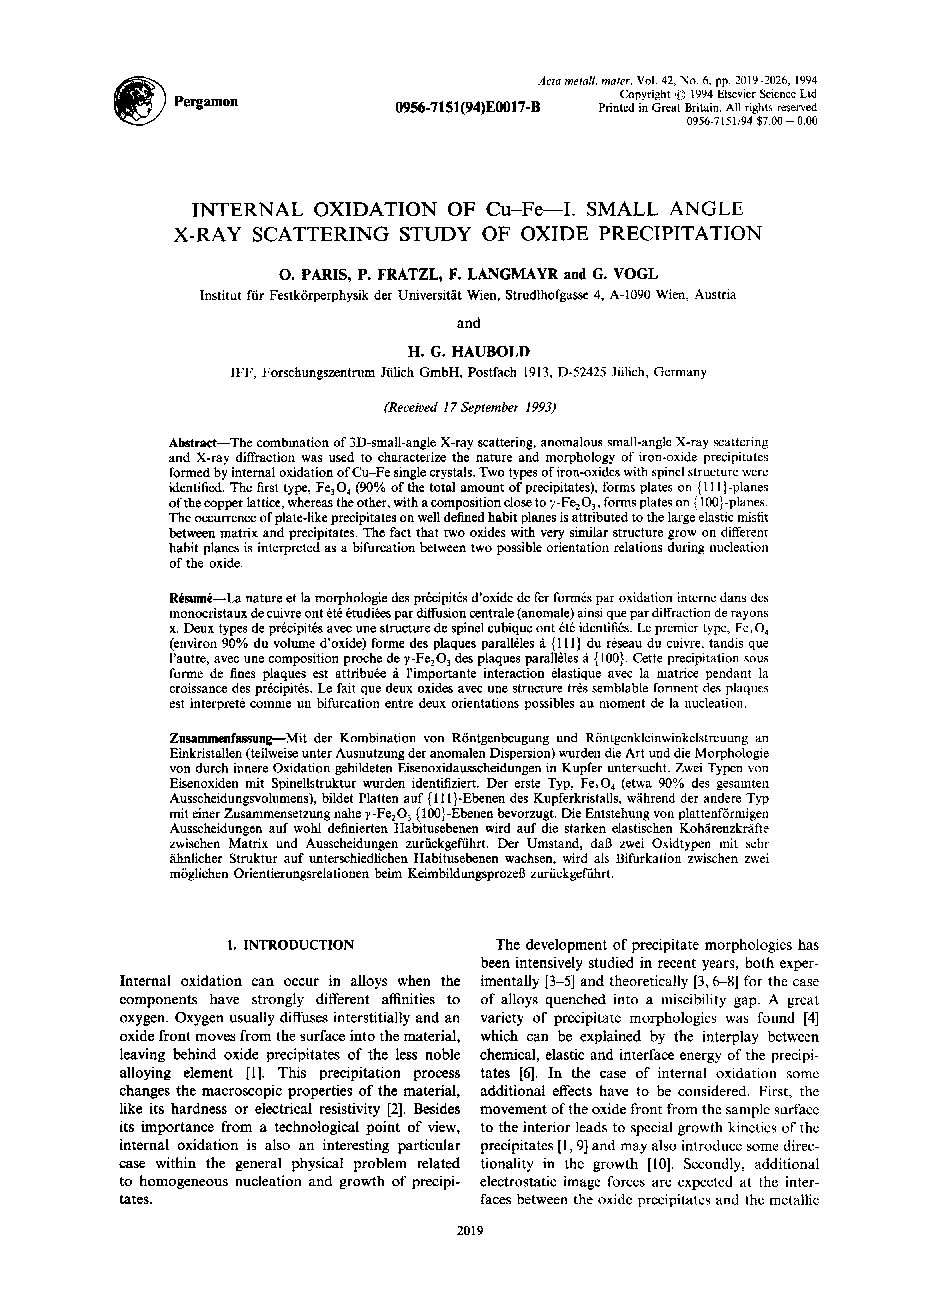 Internal oxidation of Cuî¸Fe-I. Small angle x-ray scattering study of oxide precipitation